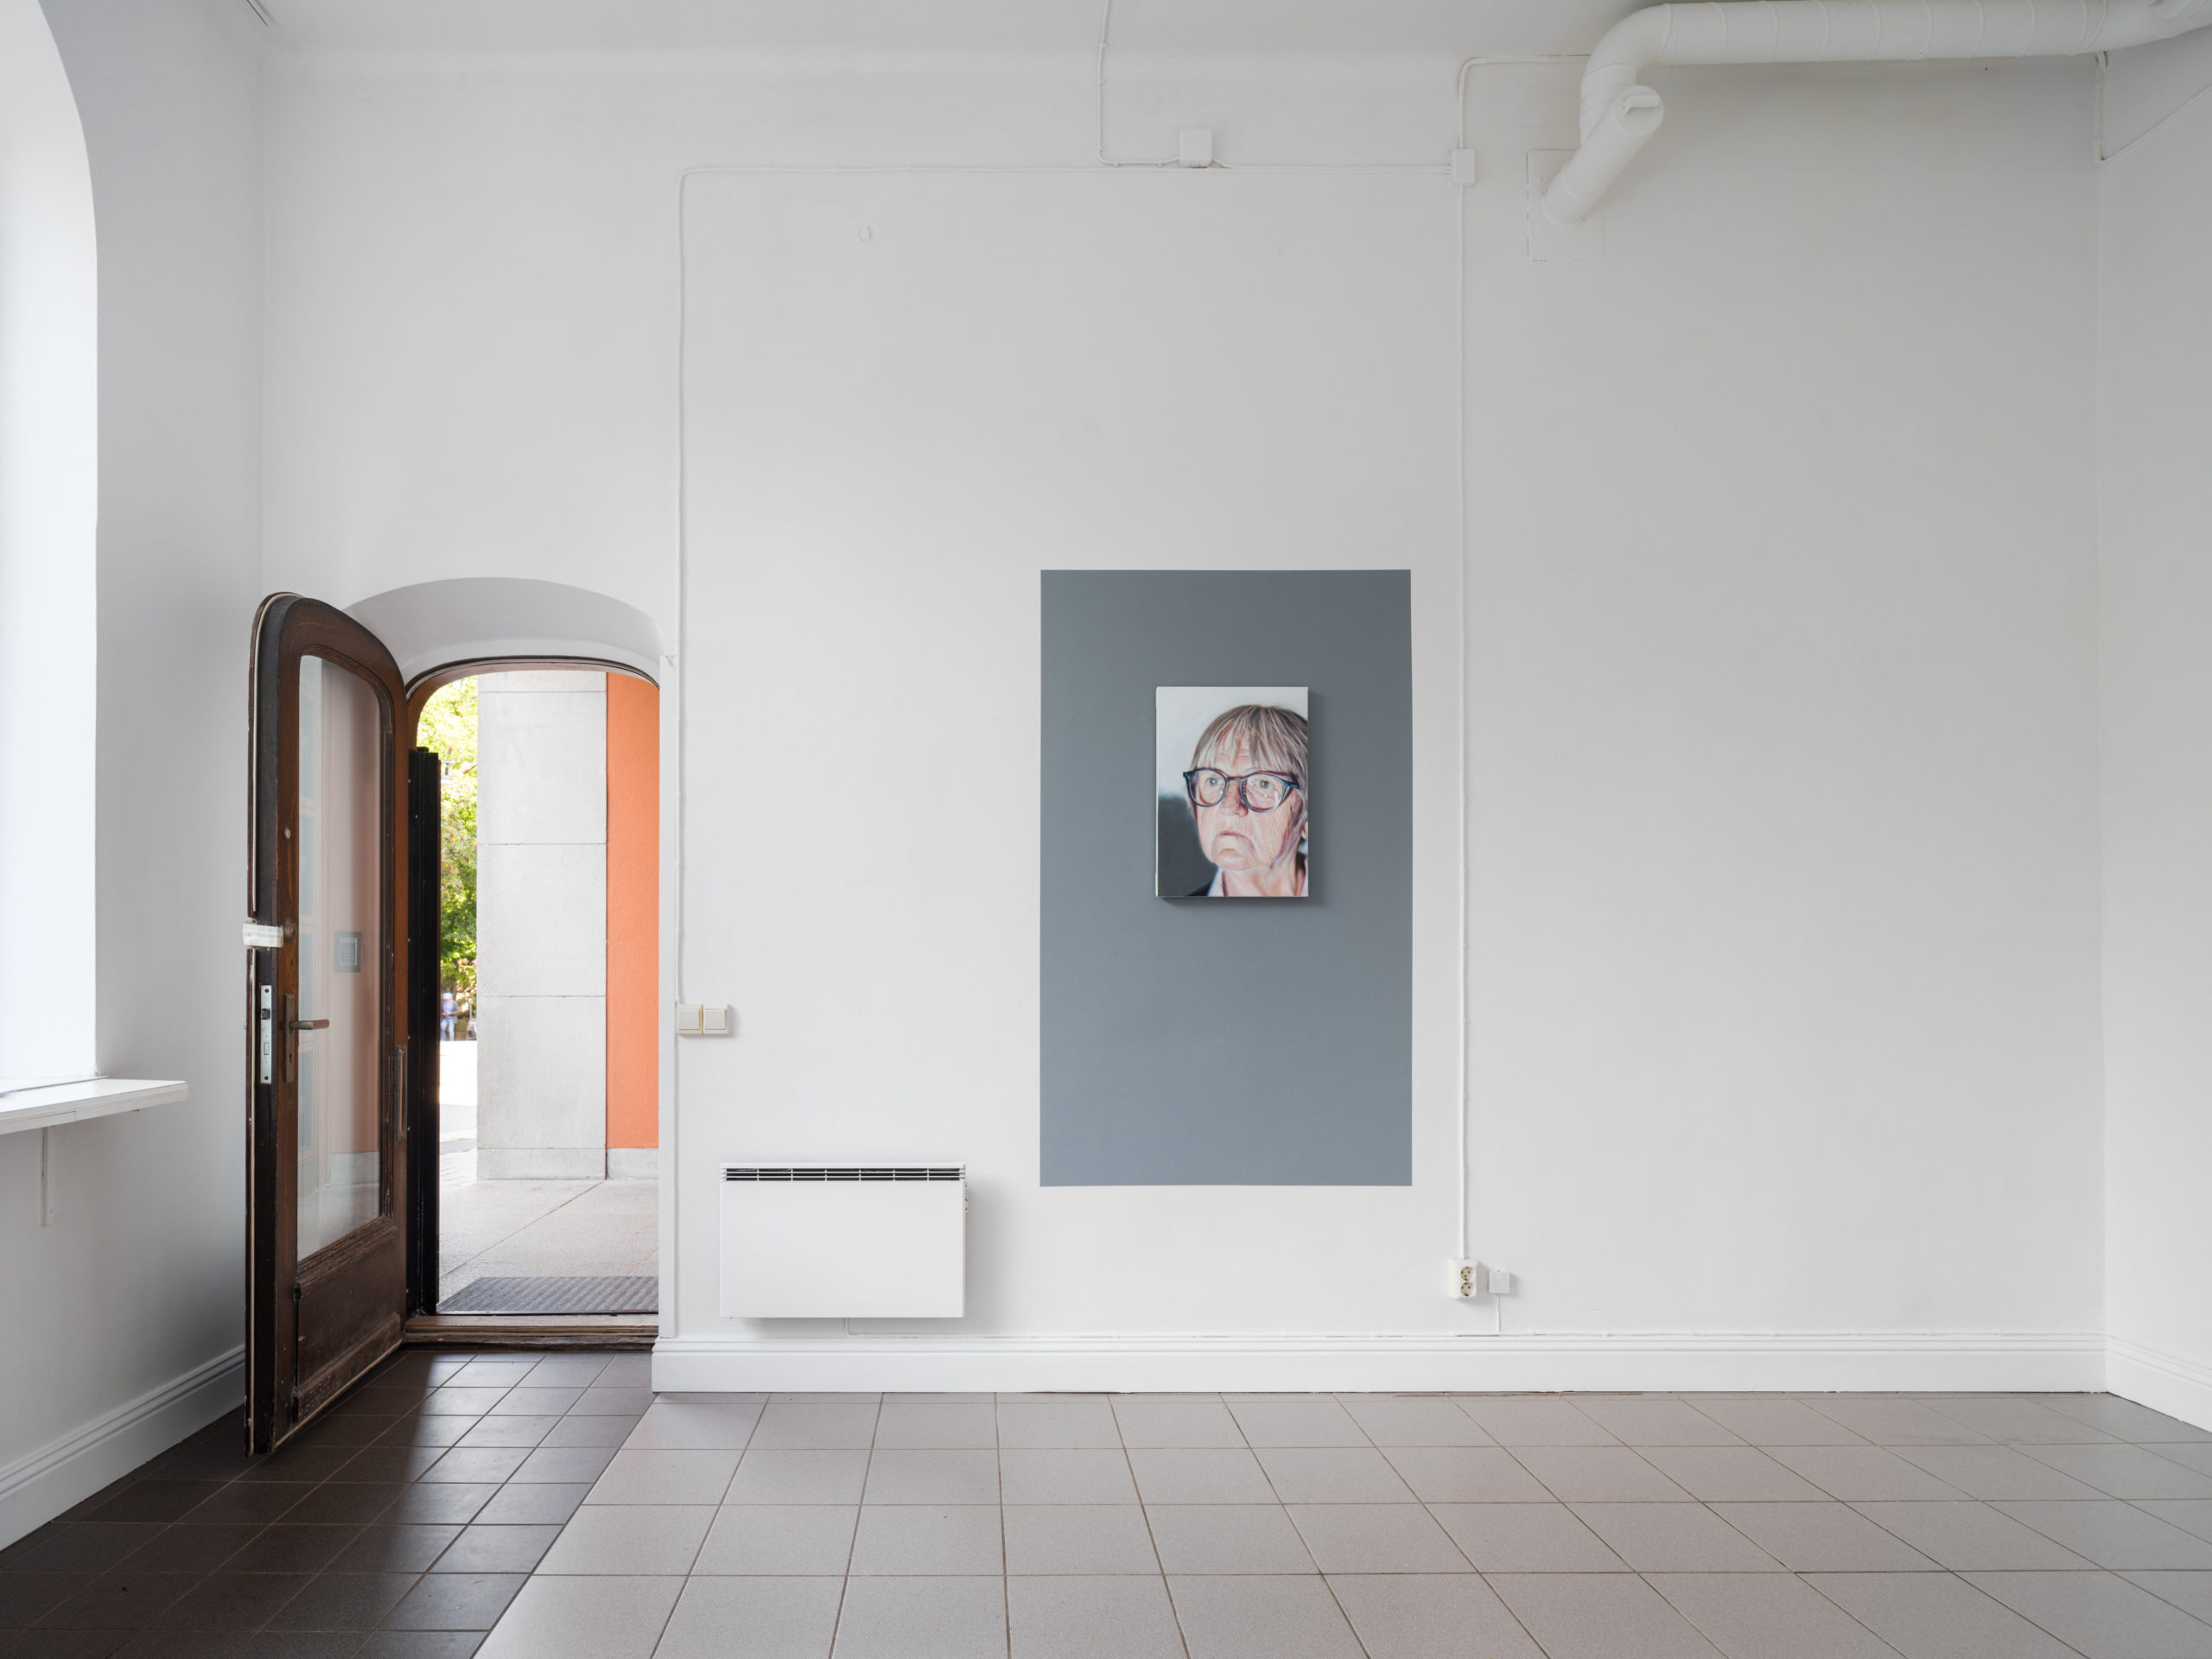 Installation view. Niklas Holmgren: "Mother / Gunilla", 2021. Oil on canvas, 56 x 40 cm